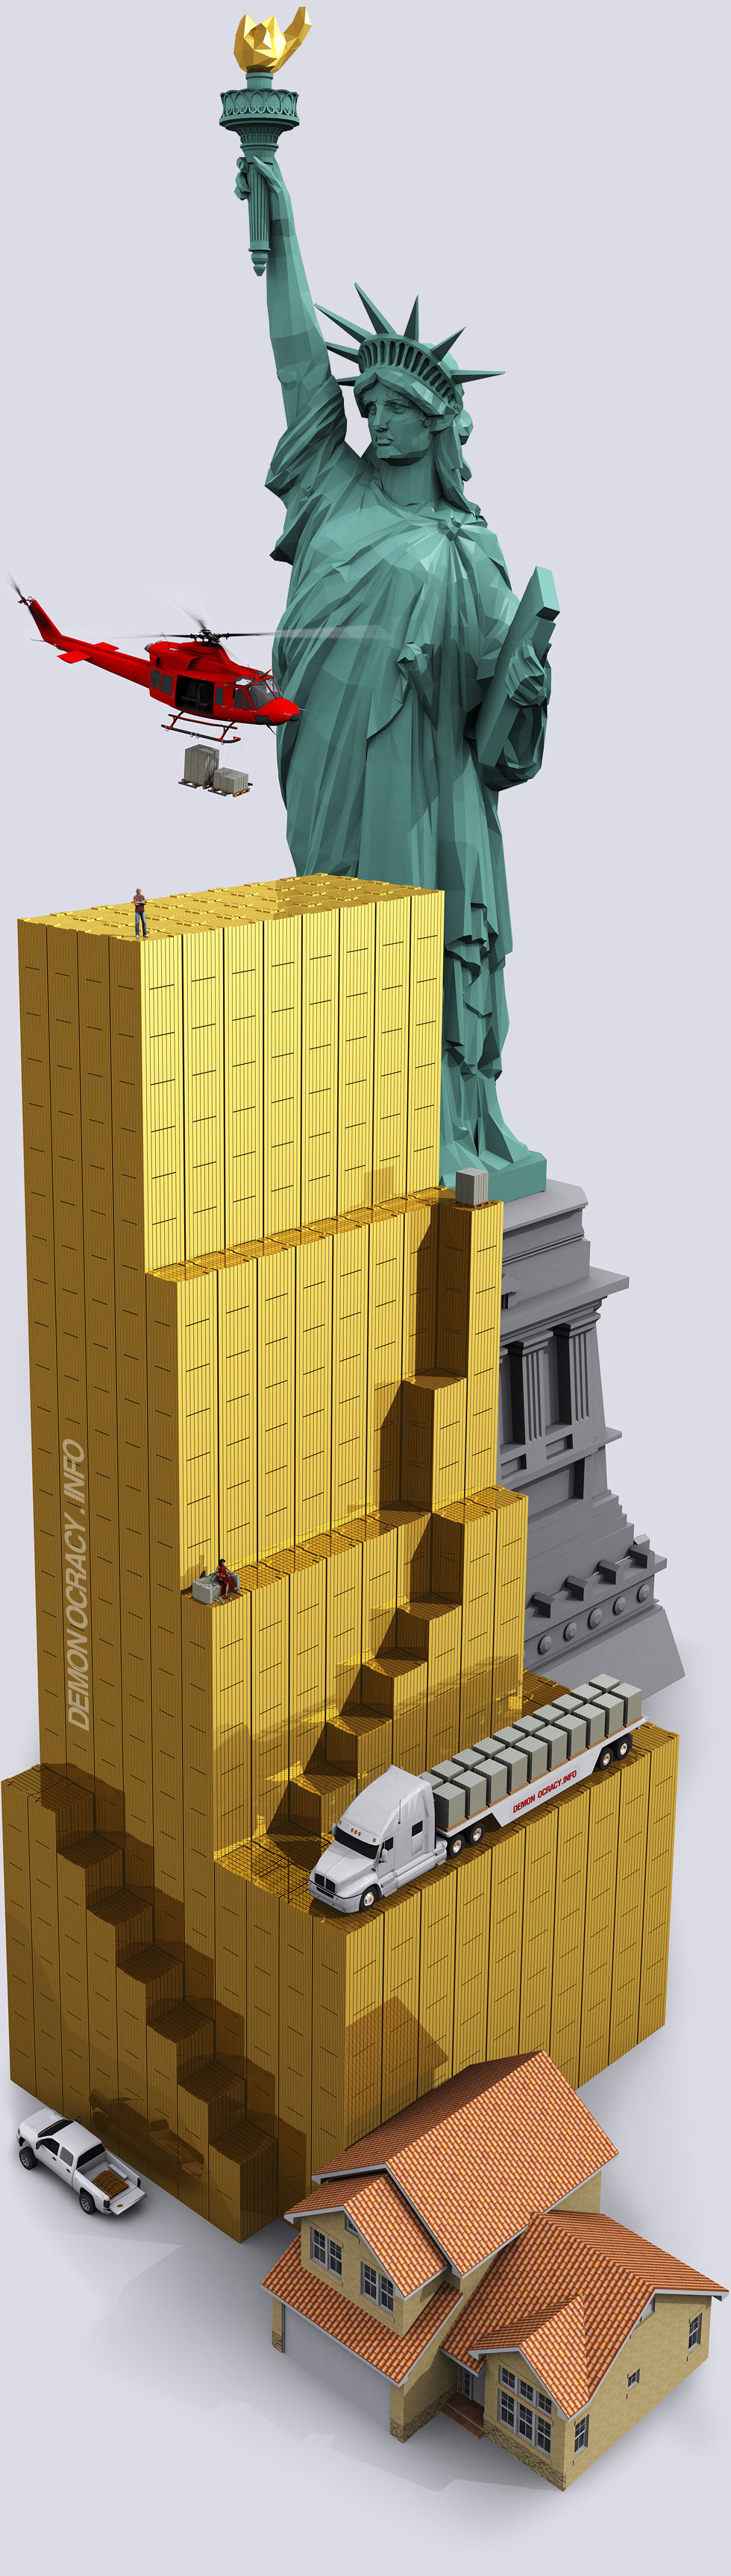 http://demonocracy.info/infographics/world/gold/images/demonocracy-gold-all_gold_in_the_world-reserves.jpg